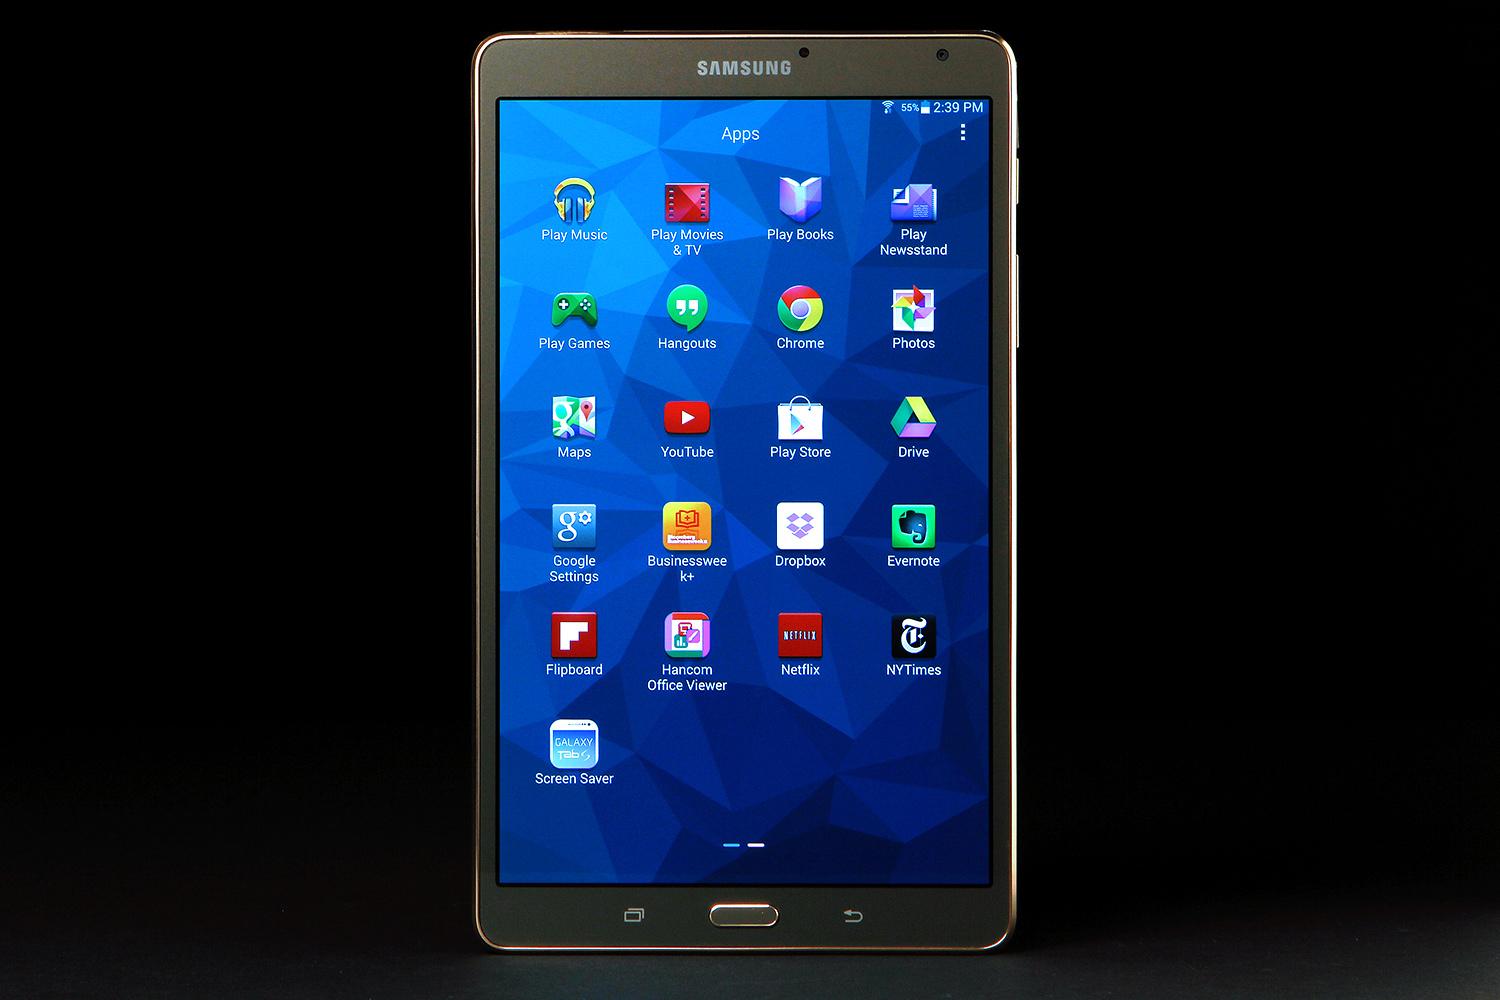 Samsung Galaxy Tab S 8.4 review